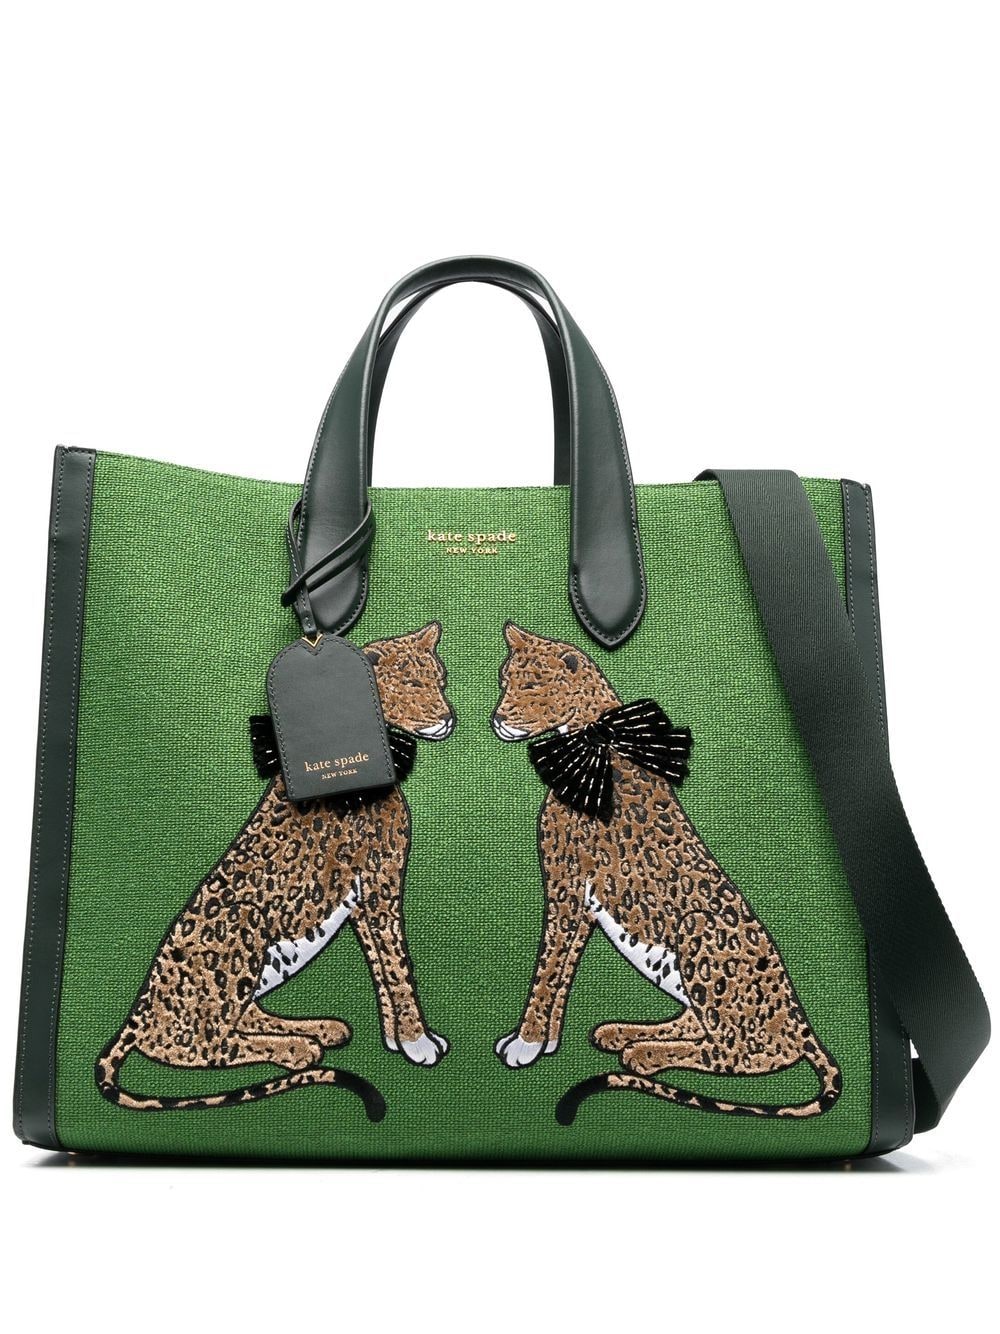 Kate Spade Large Lady Leopard Tote Bag - Farfetch